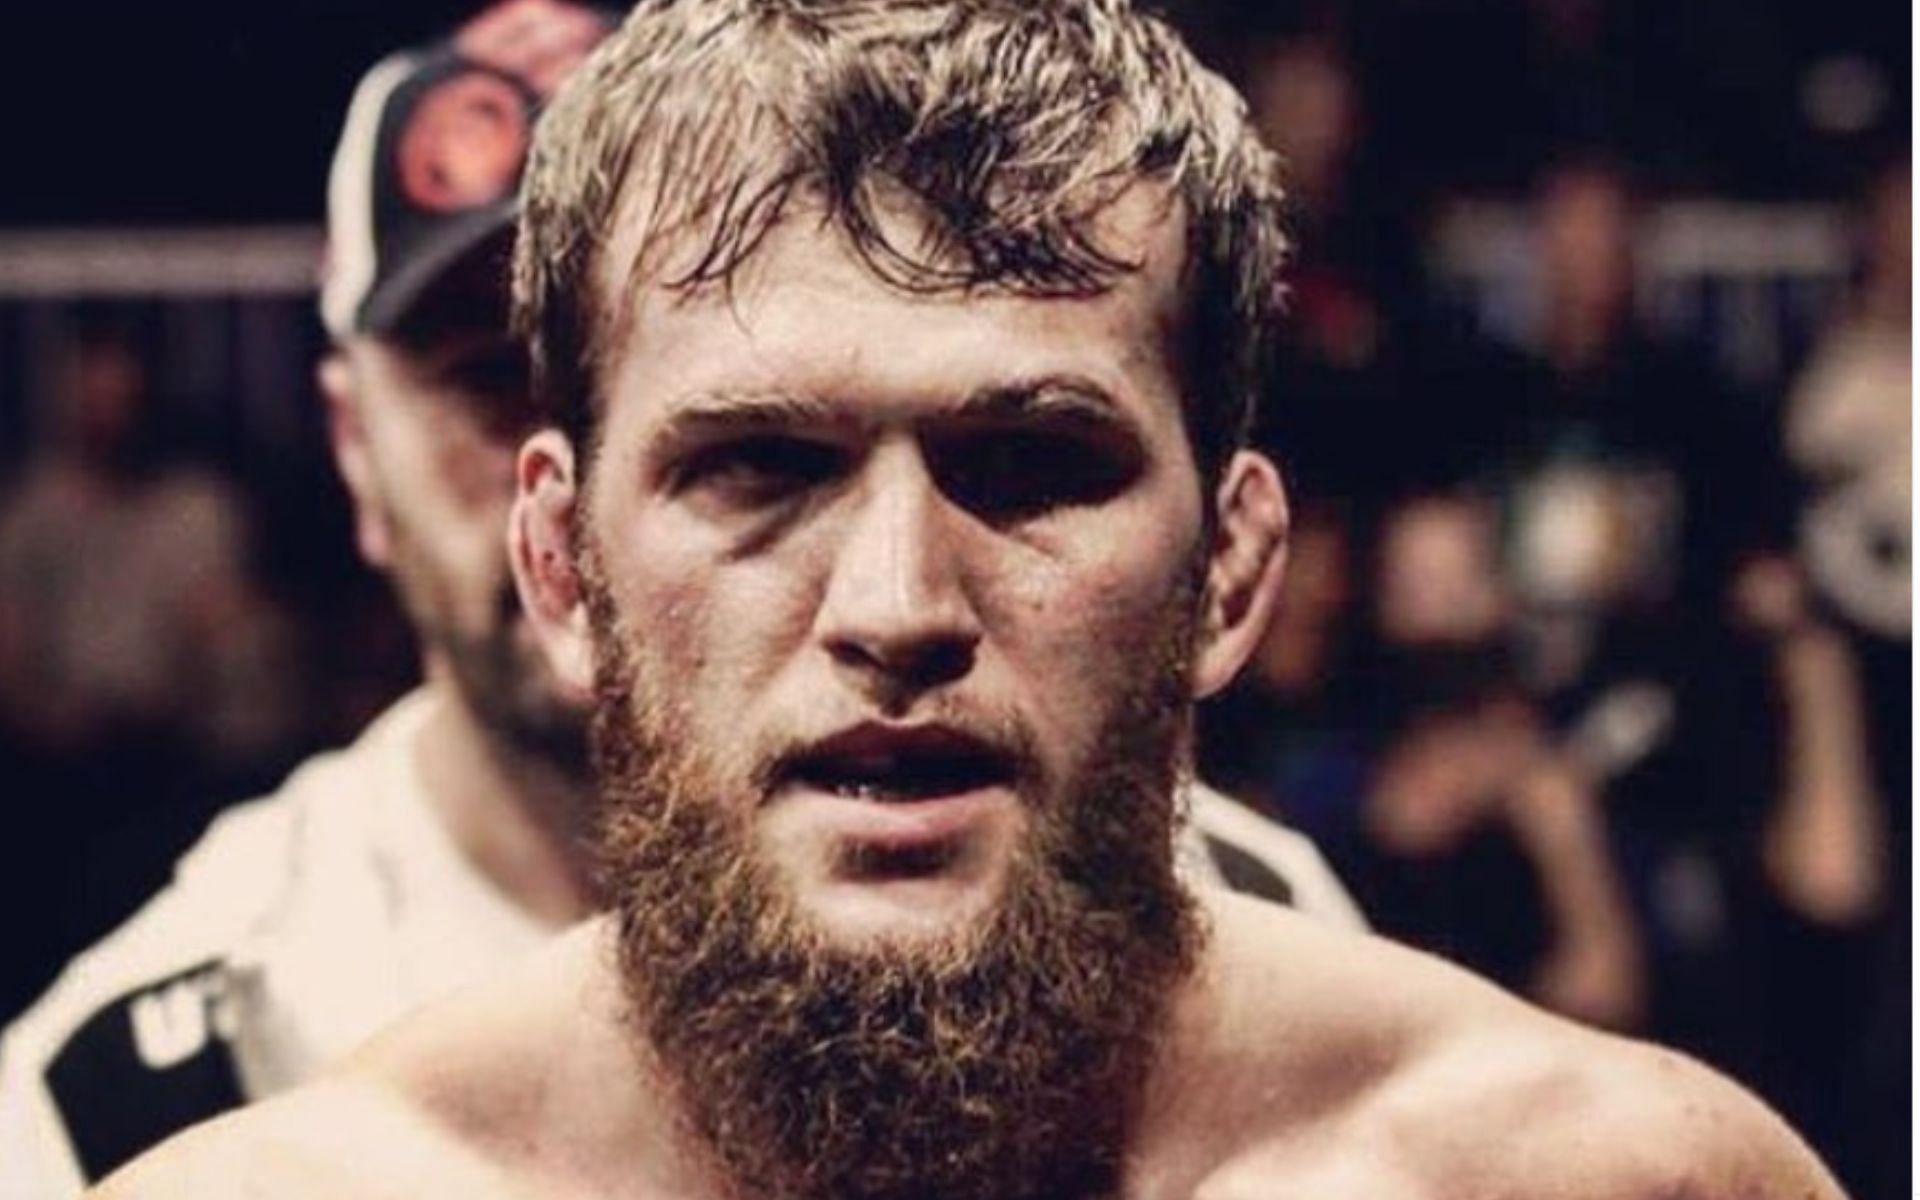 Former UFC fighter Abdul-Kerim Edilov [Image courtesy of @abdul_kerim_edilov on Instagram]